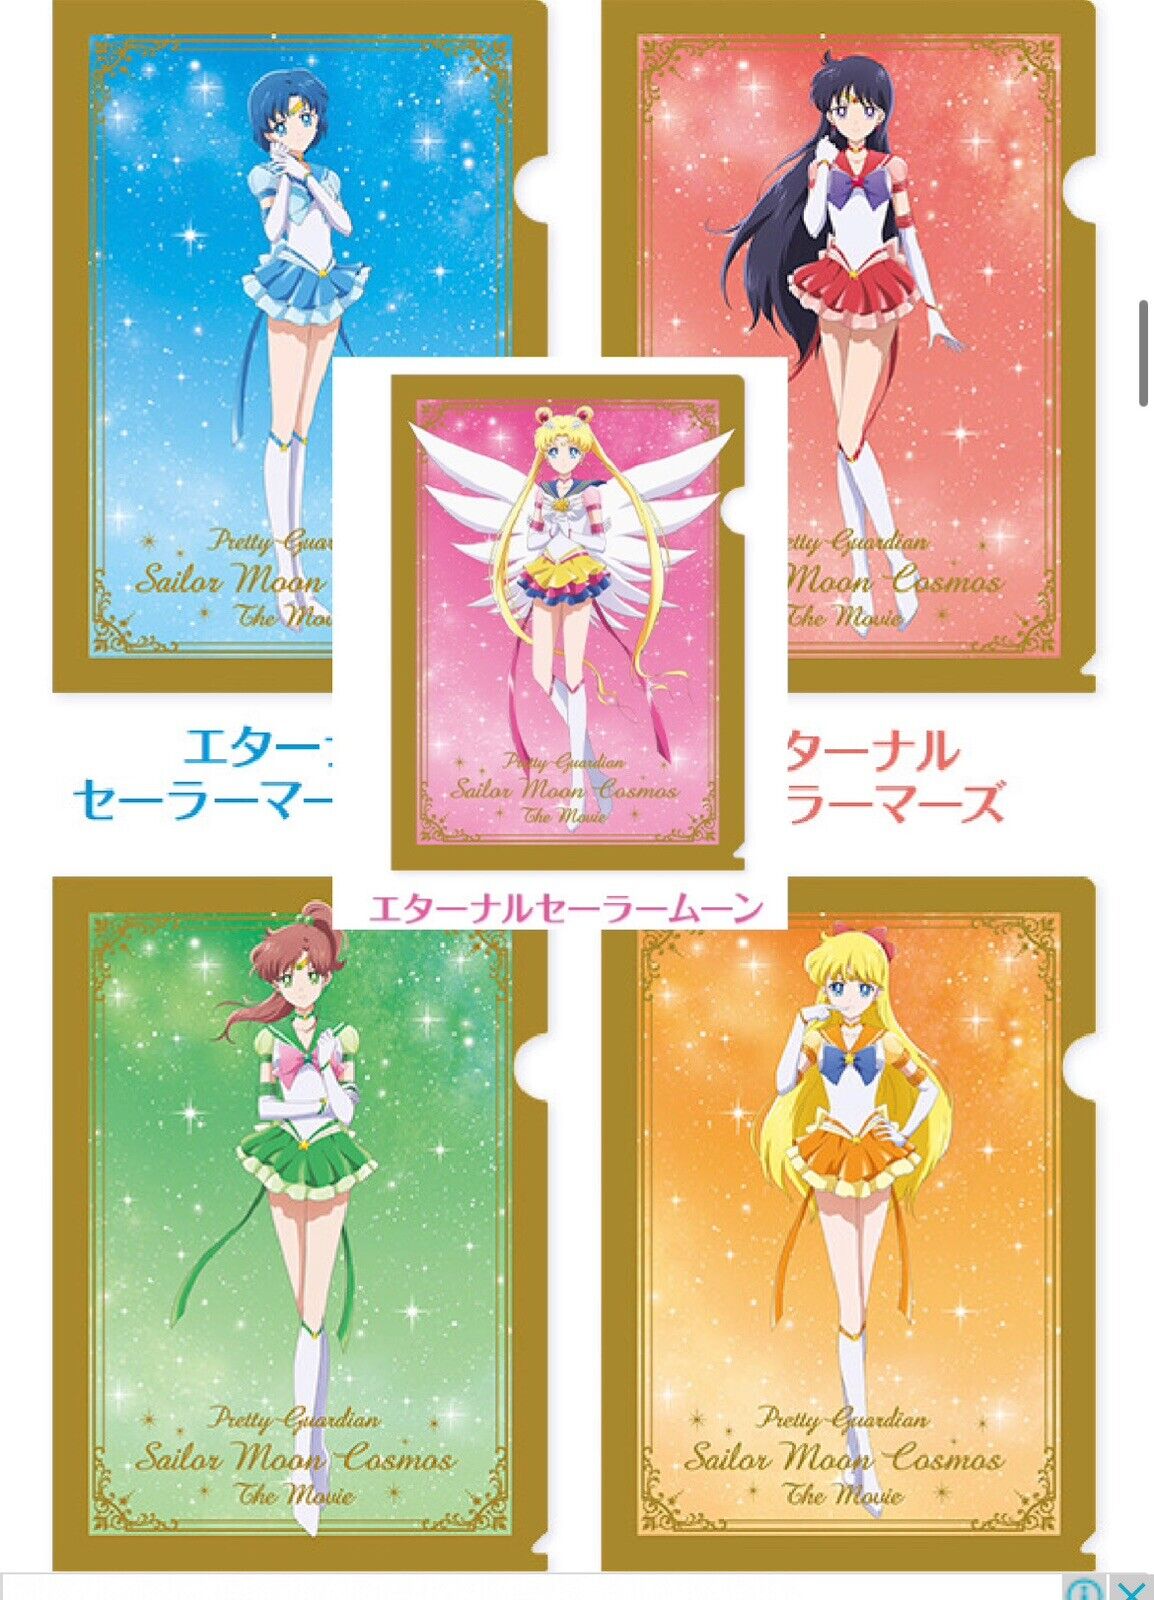 "Pretty Guardian: Sailor Moon Cosmos" The Movie A4 File Folder - Rosey’s Kawaii Shop